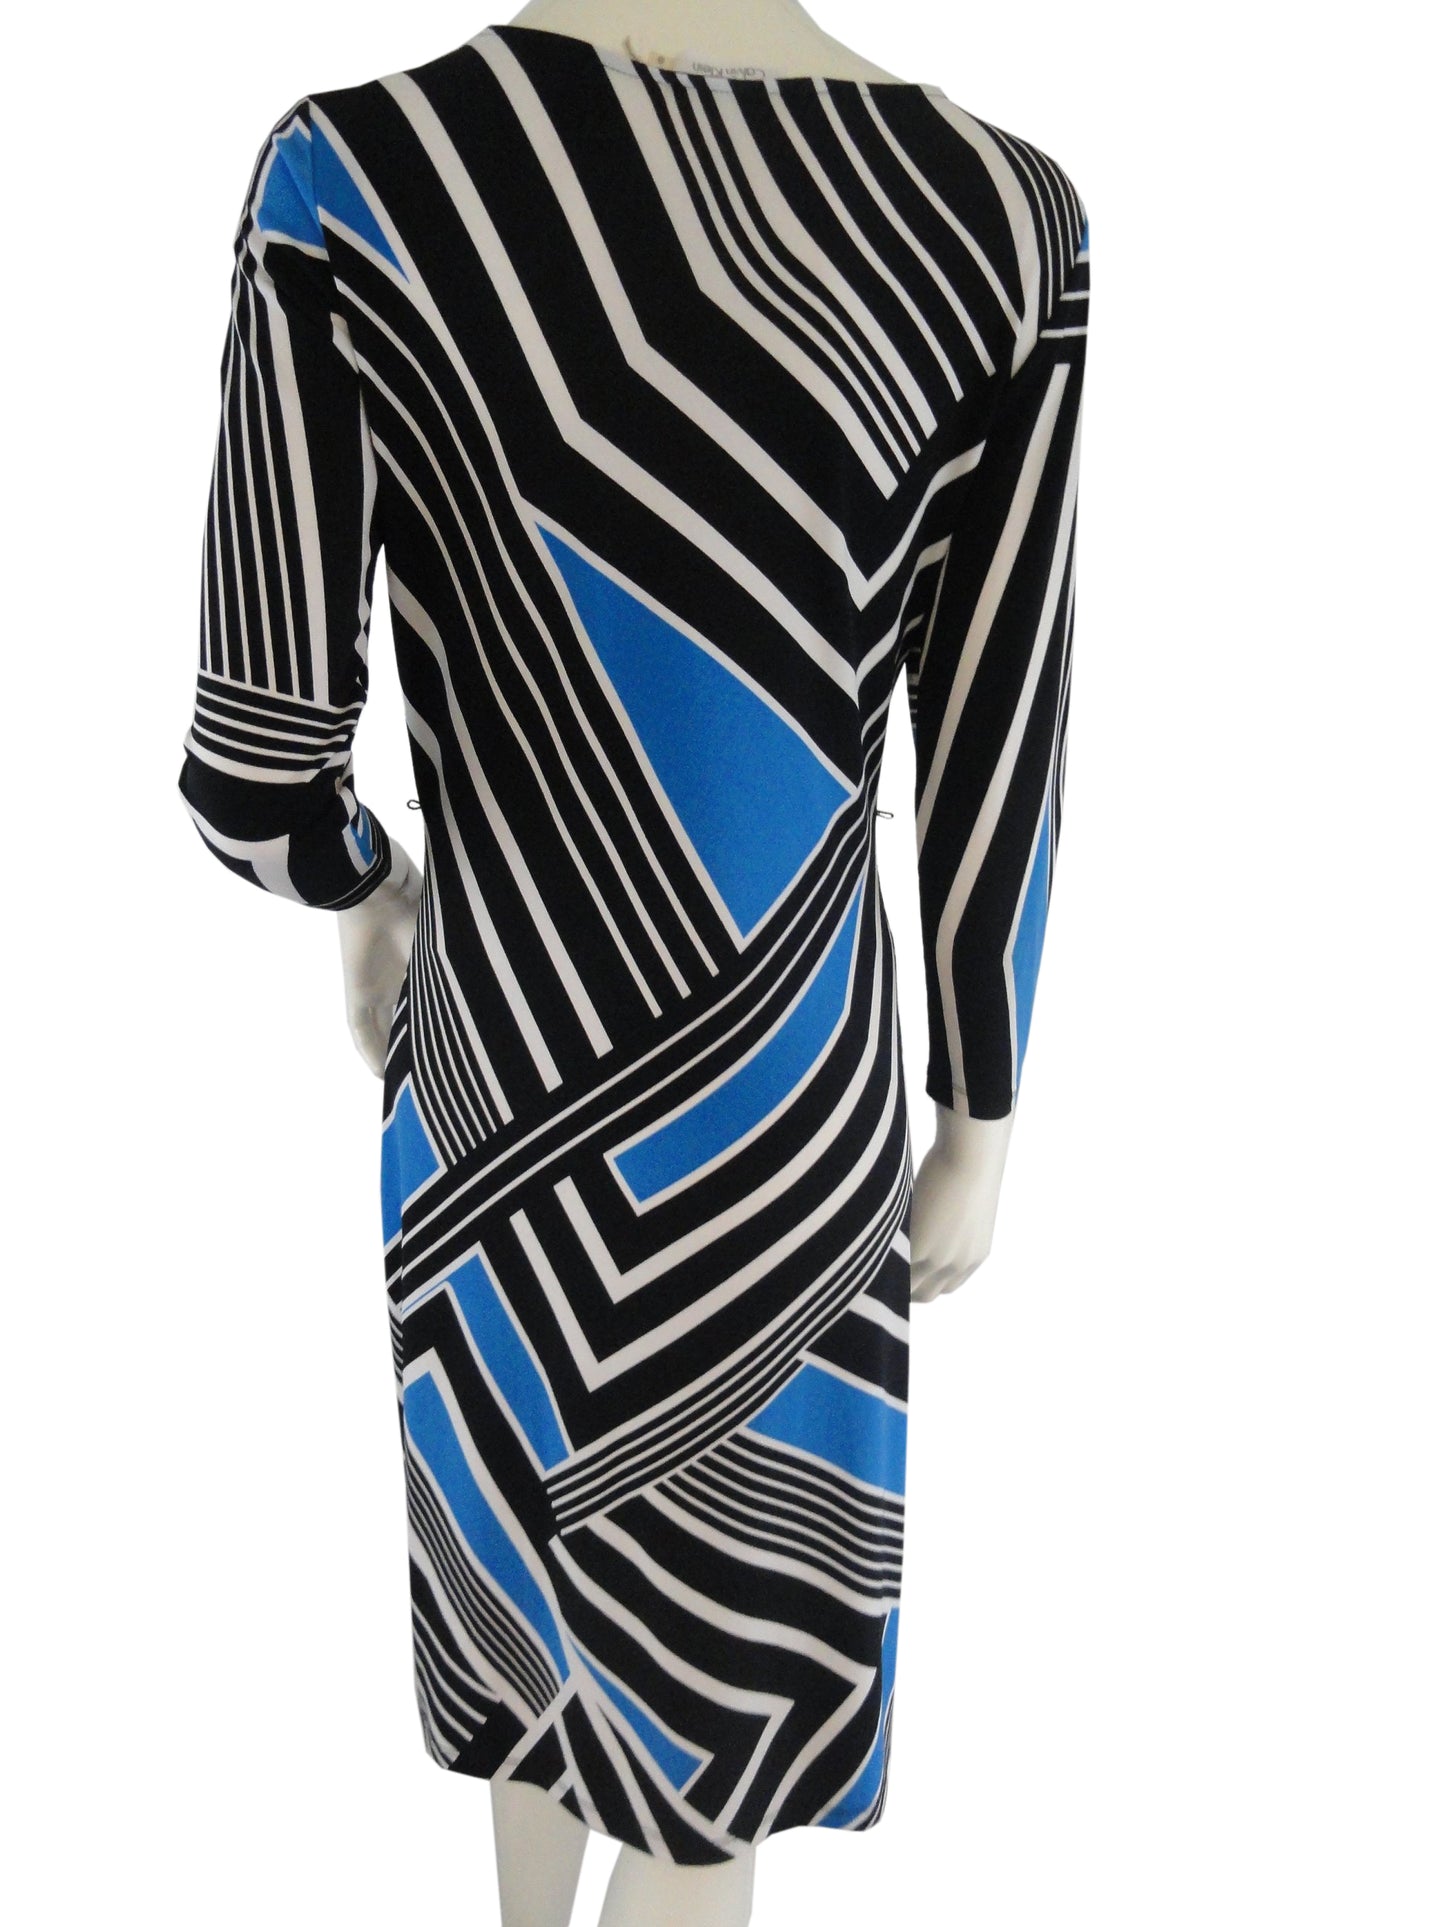 Calvin Klein Black, White and Blue Dress Size 8 SKU 001003